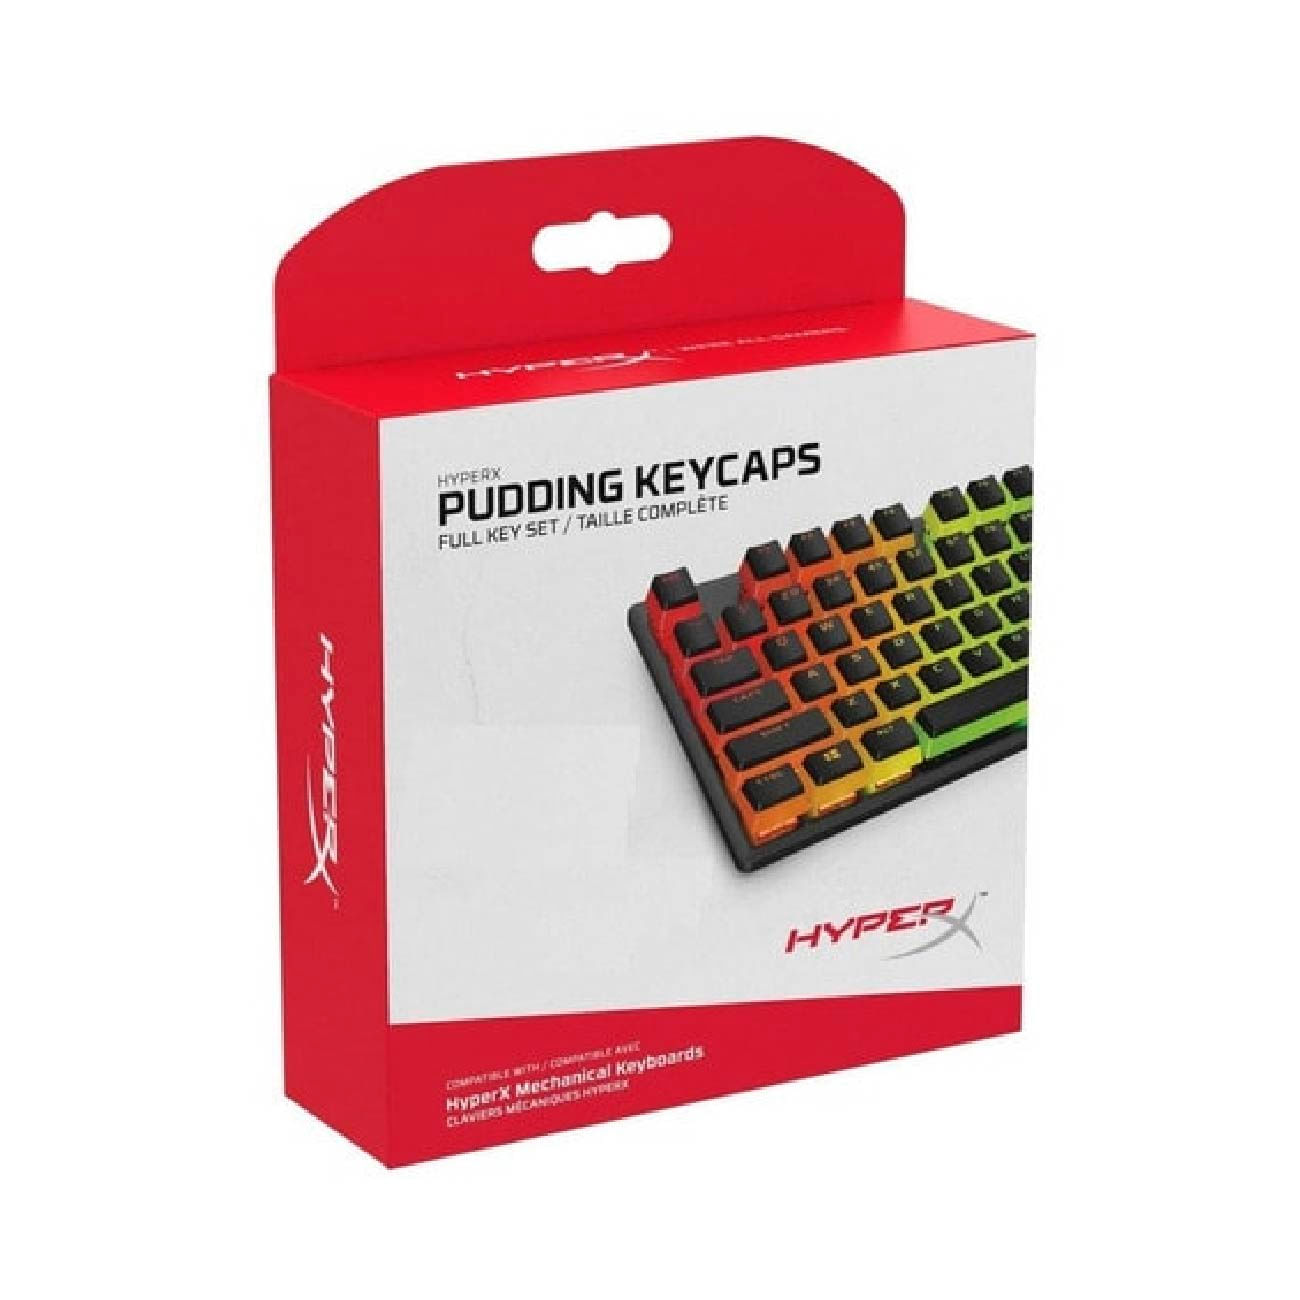 Teclas Hyperx Pudding Keycaps para teclados mecánicos HKCPXA-BK-LA/G